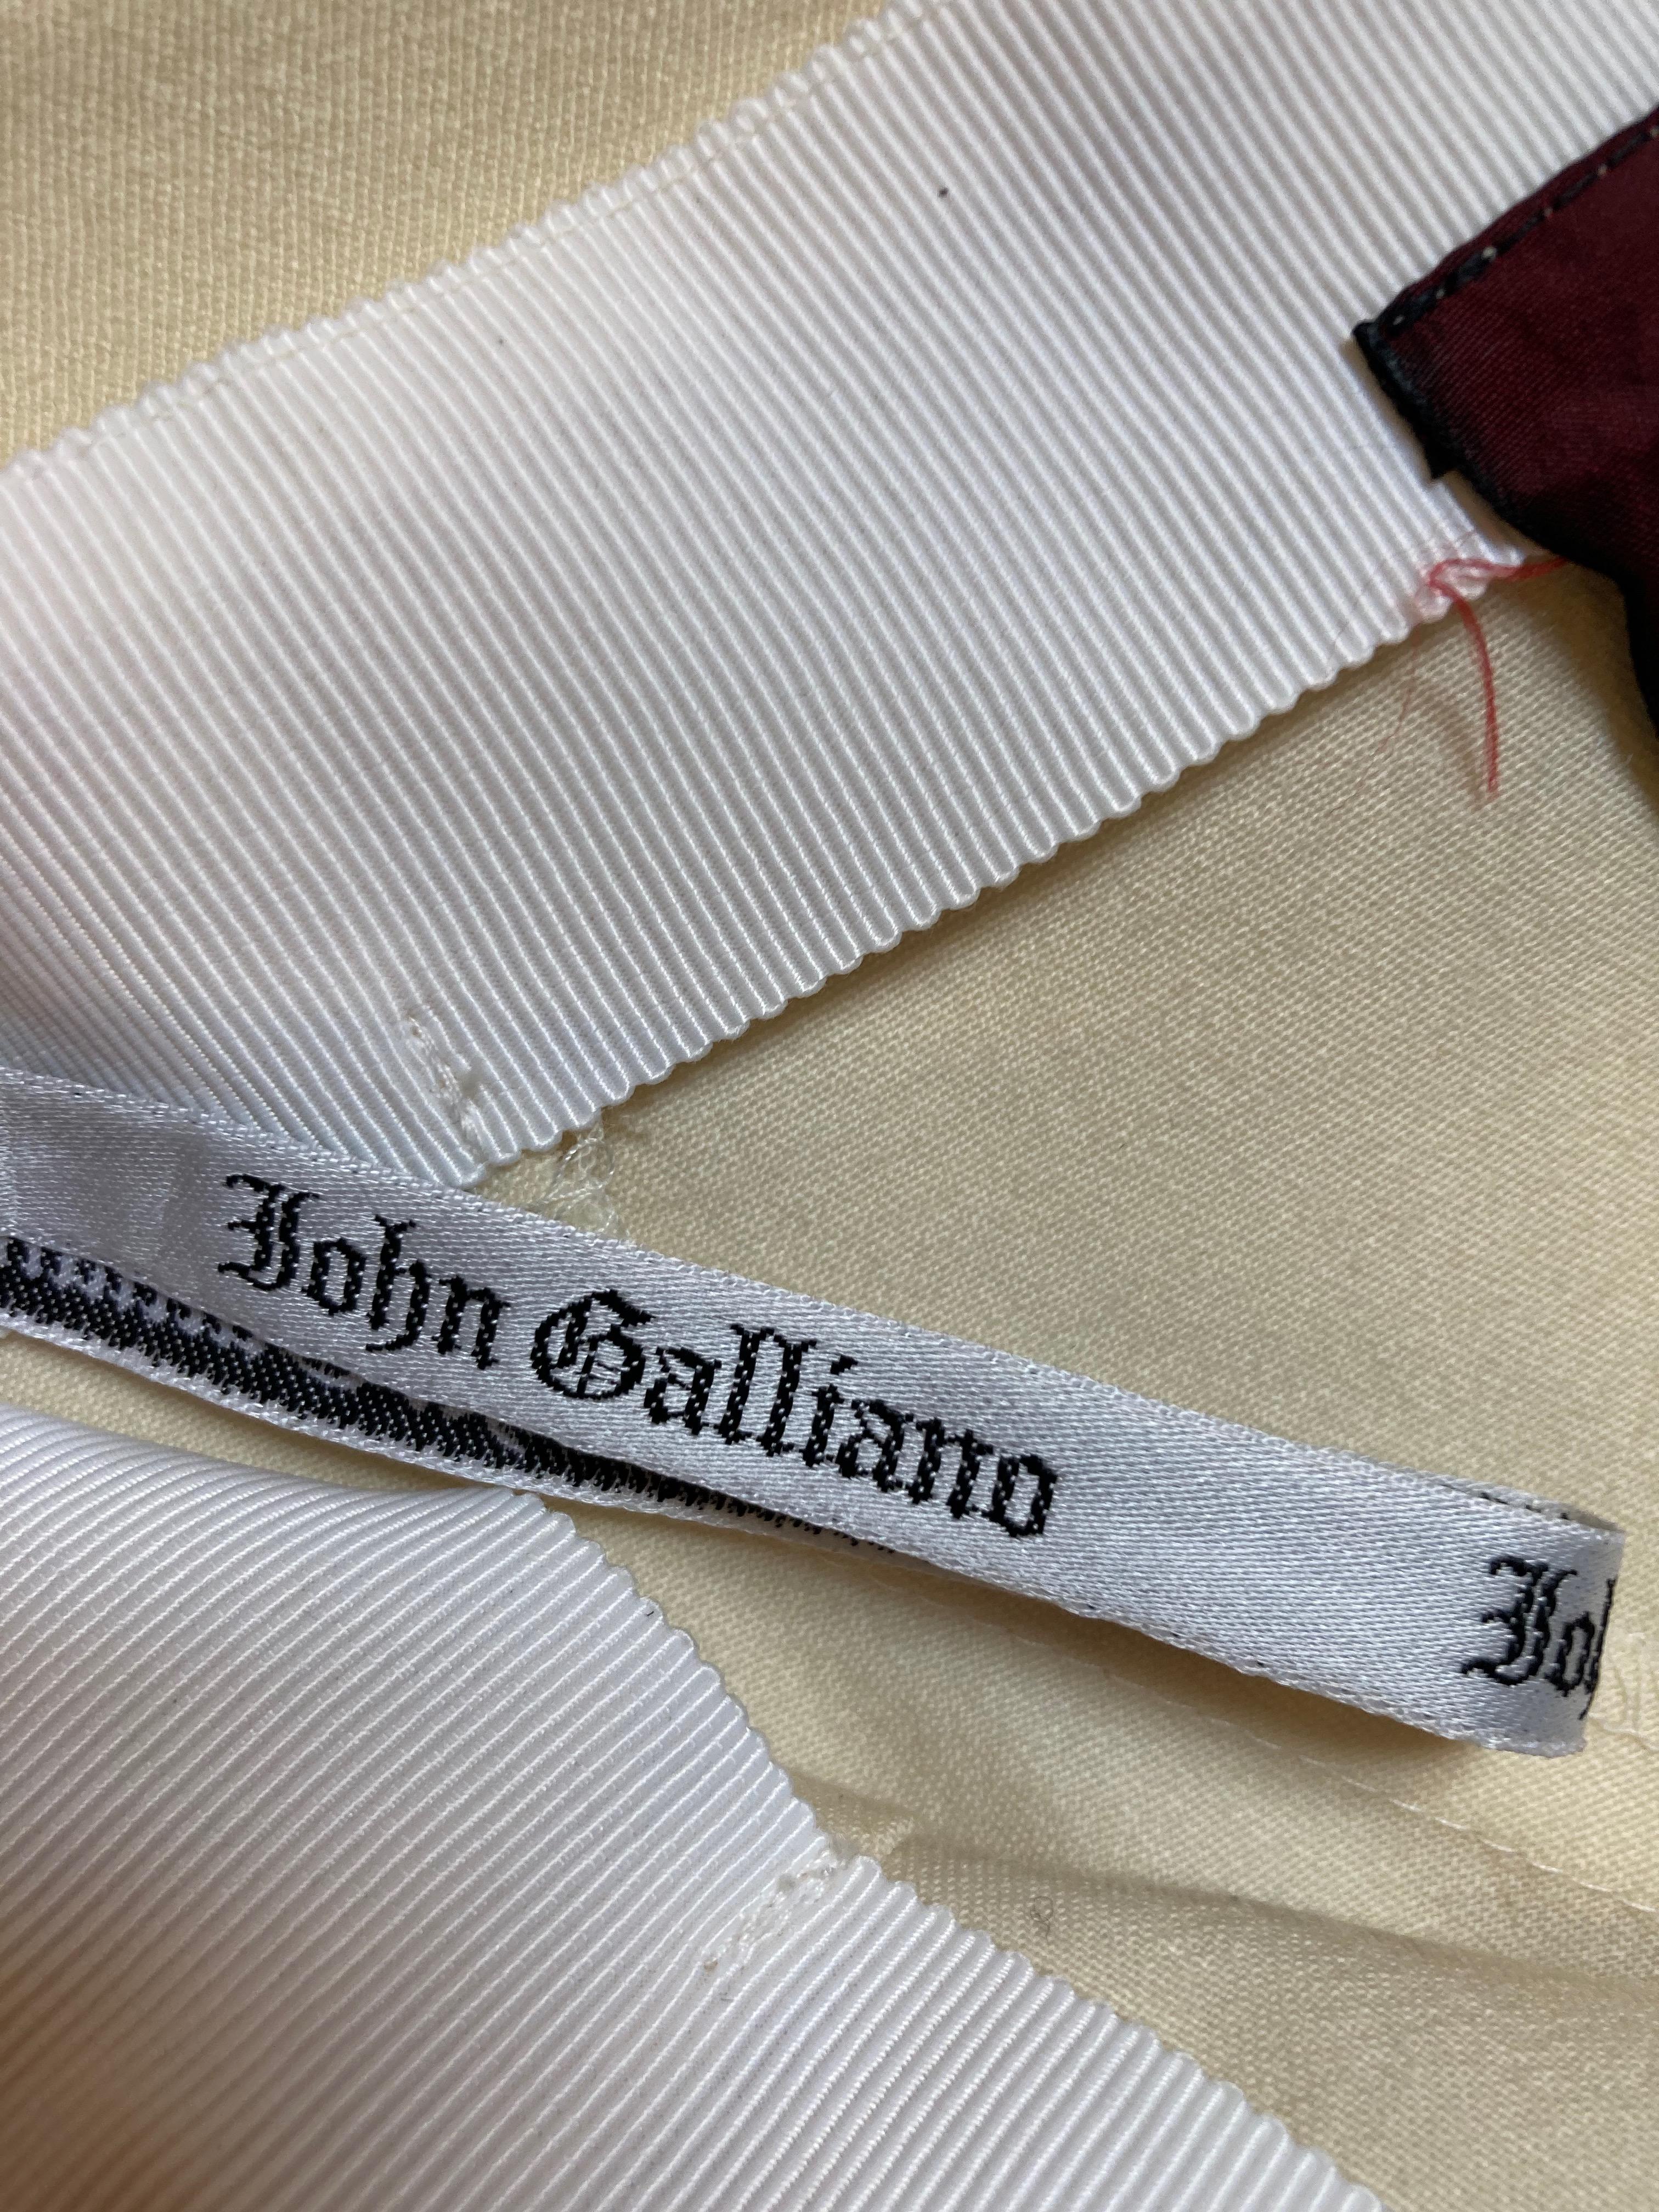 1980's John Galliano London Label Cream Pencil Skirt 2